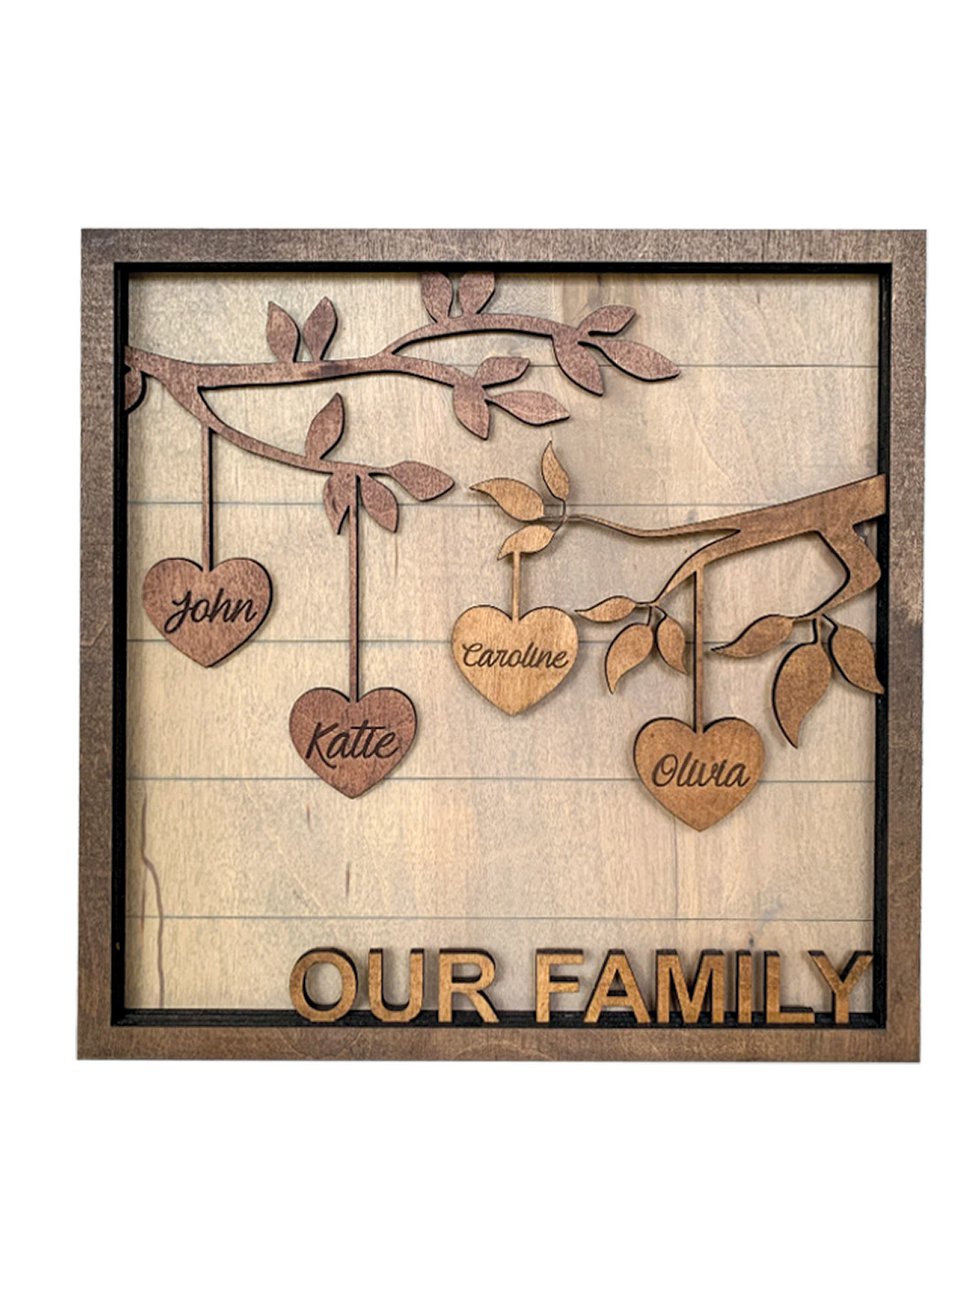 family tree boomerrang designs.jpg